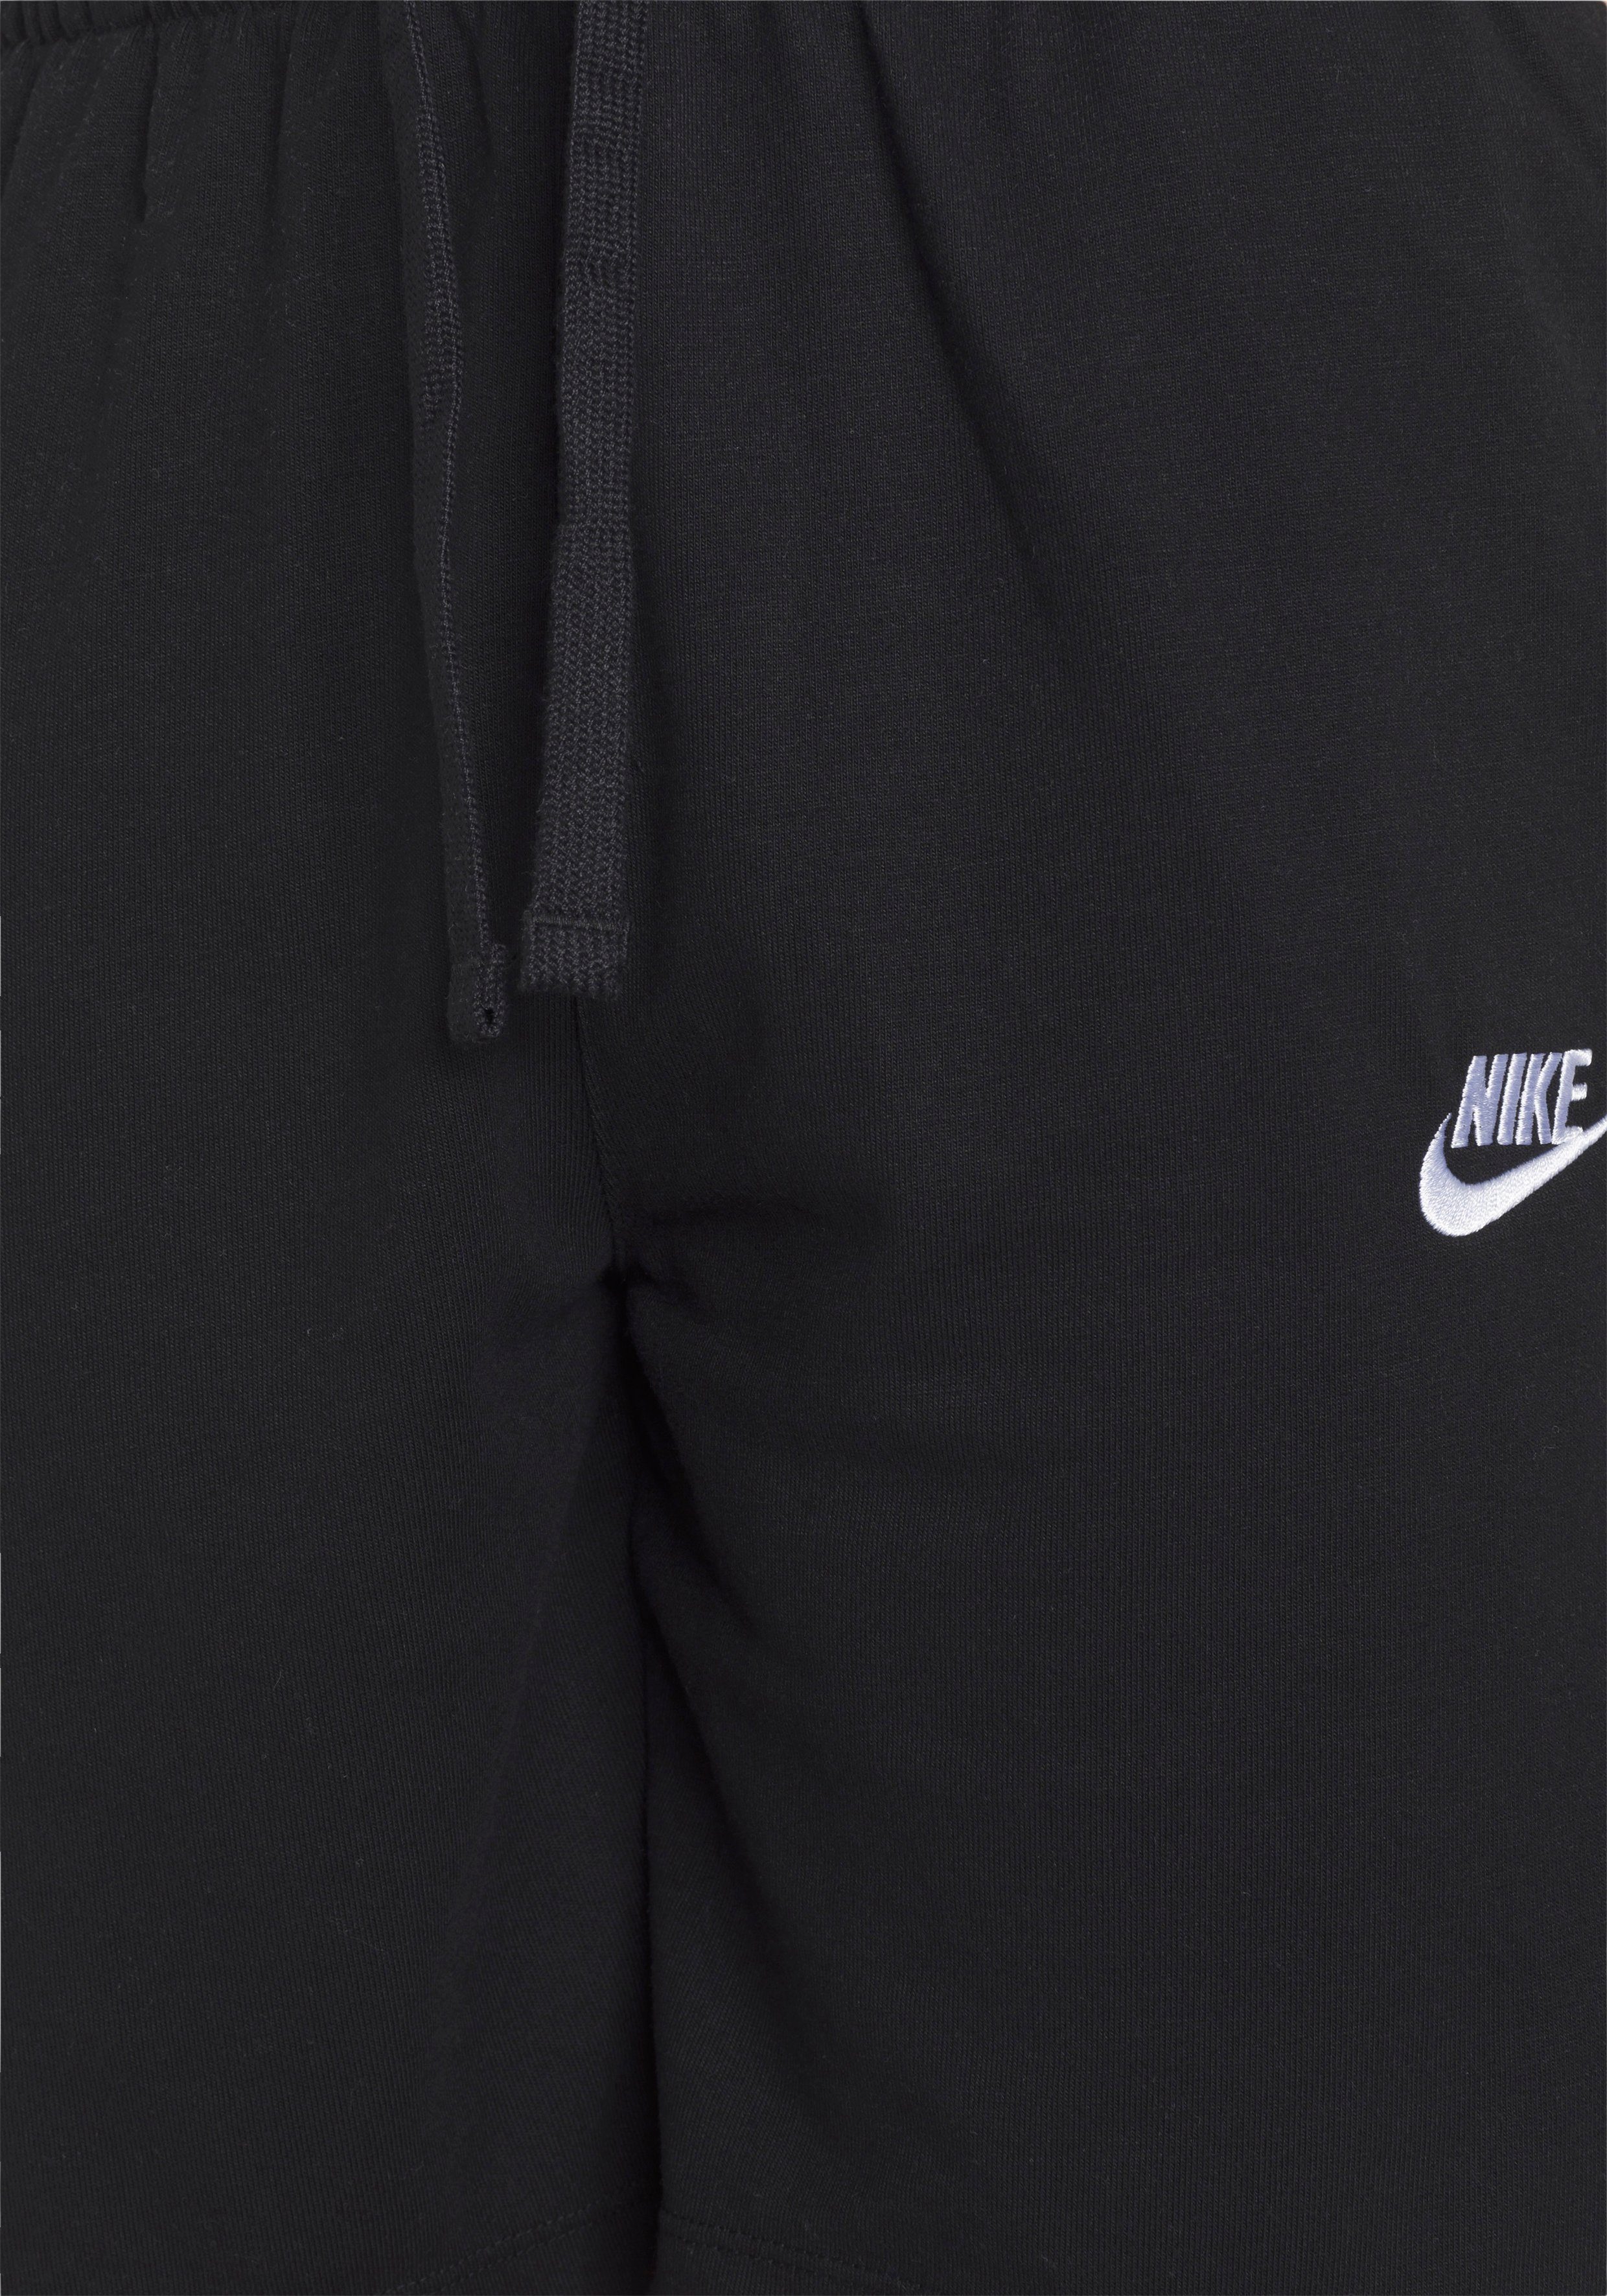 Sportswear (BOYS) JERSEY BIG schwarz SHORTS Nike KIDS' Shorts